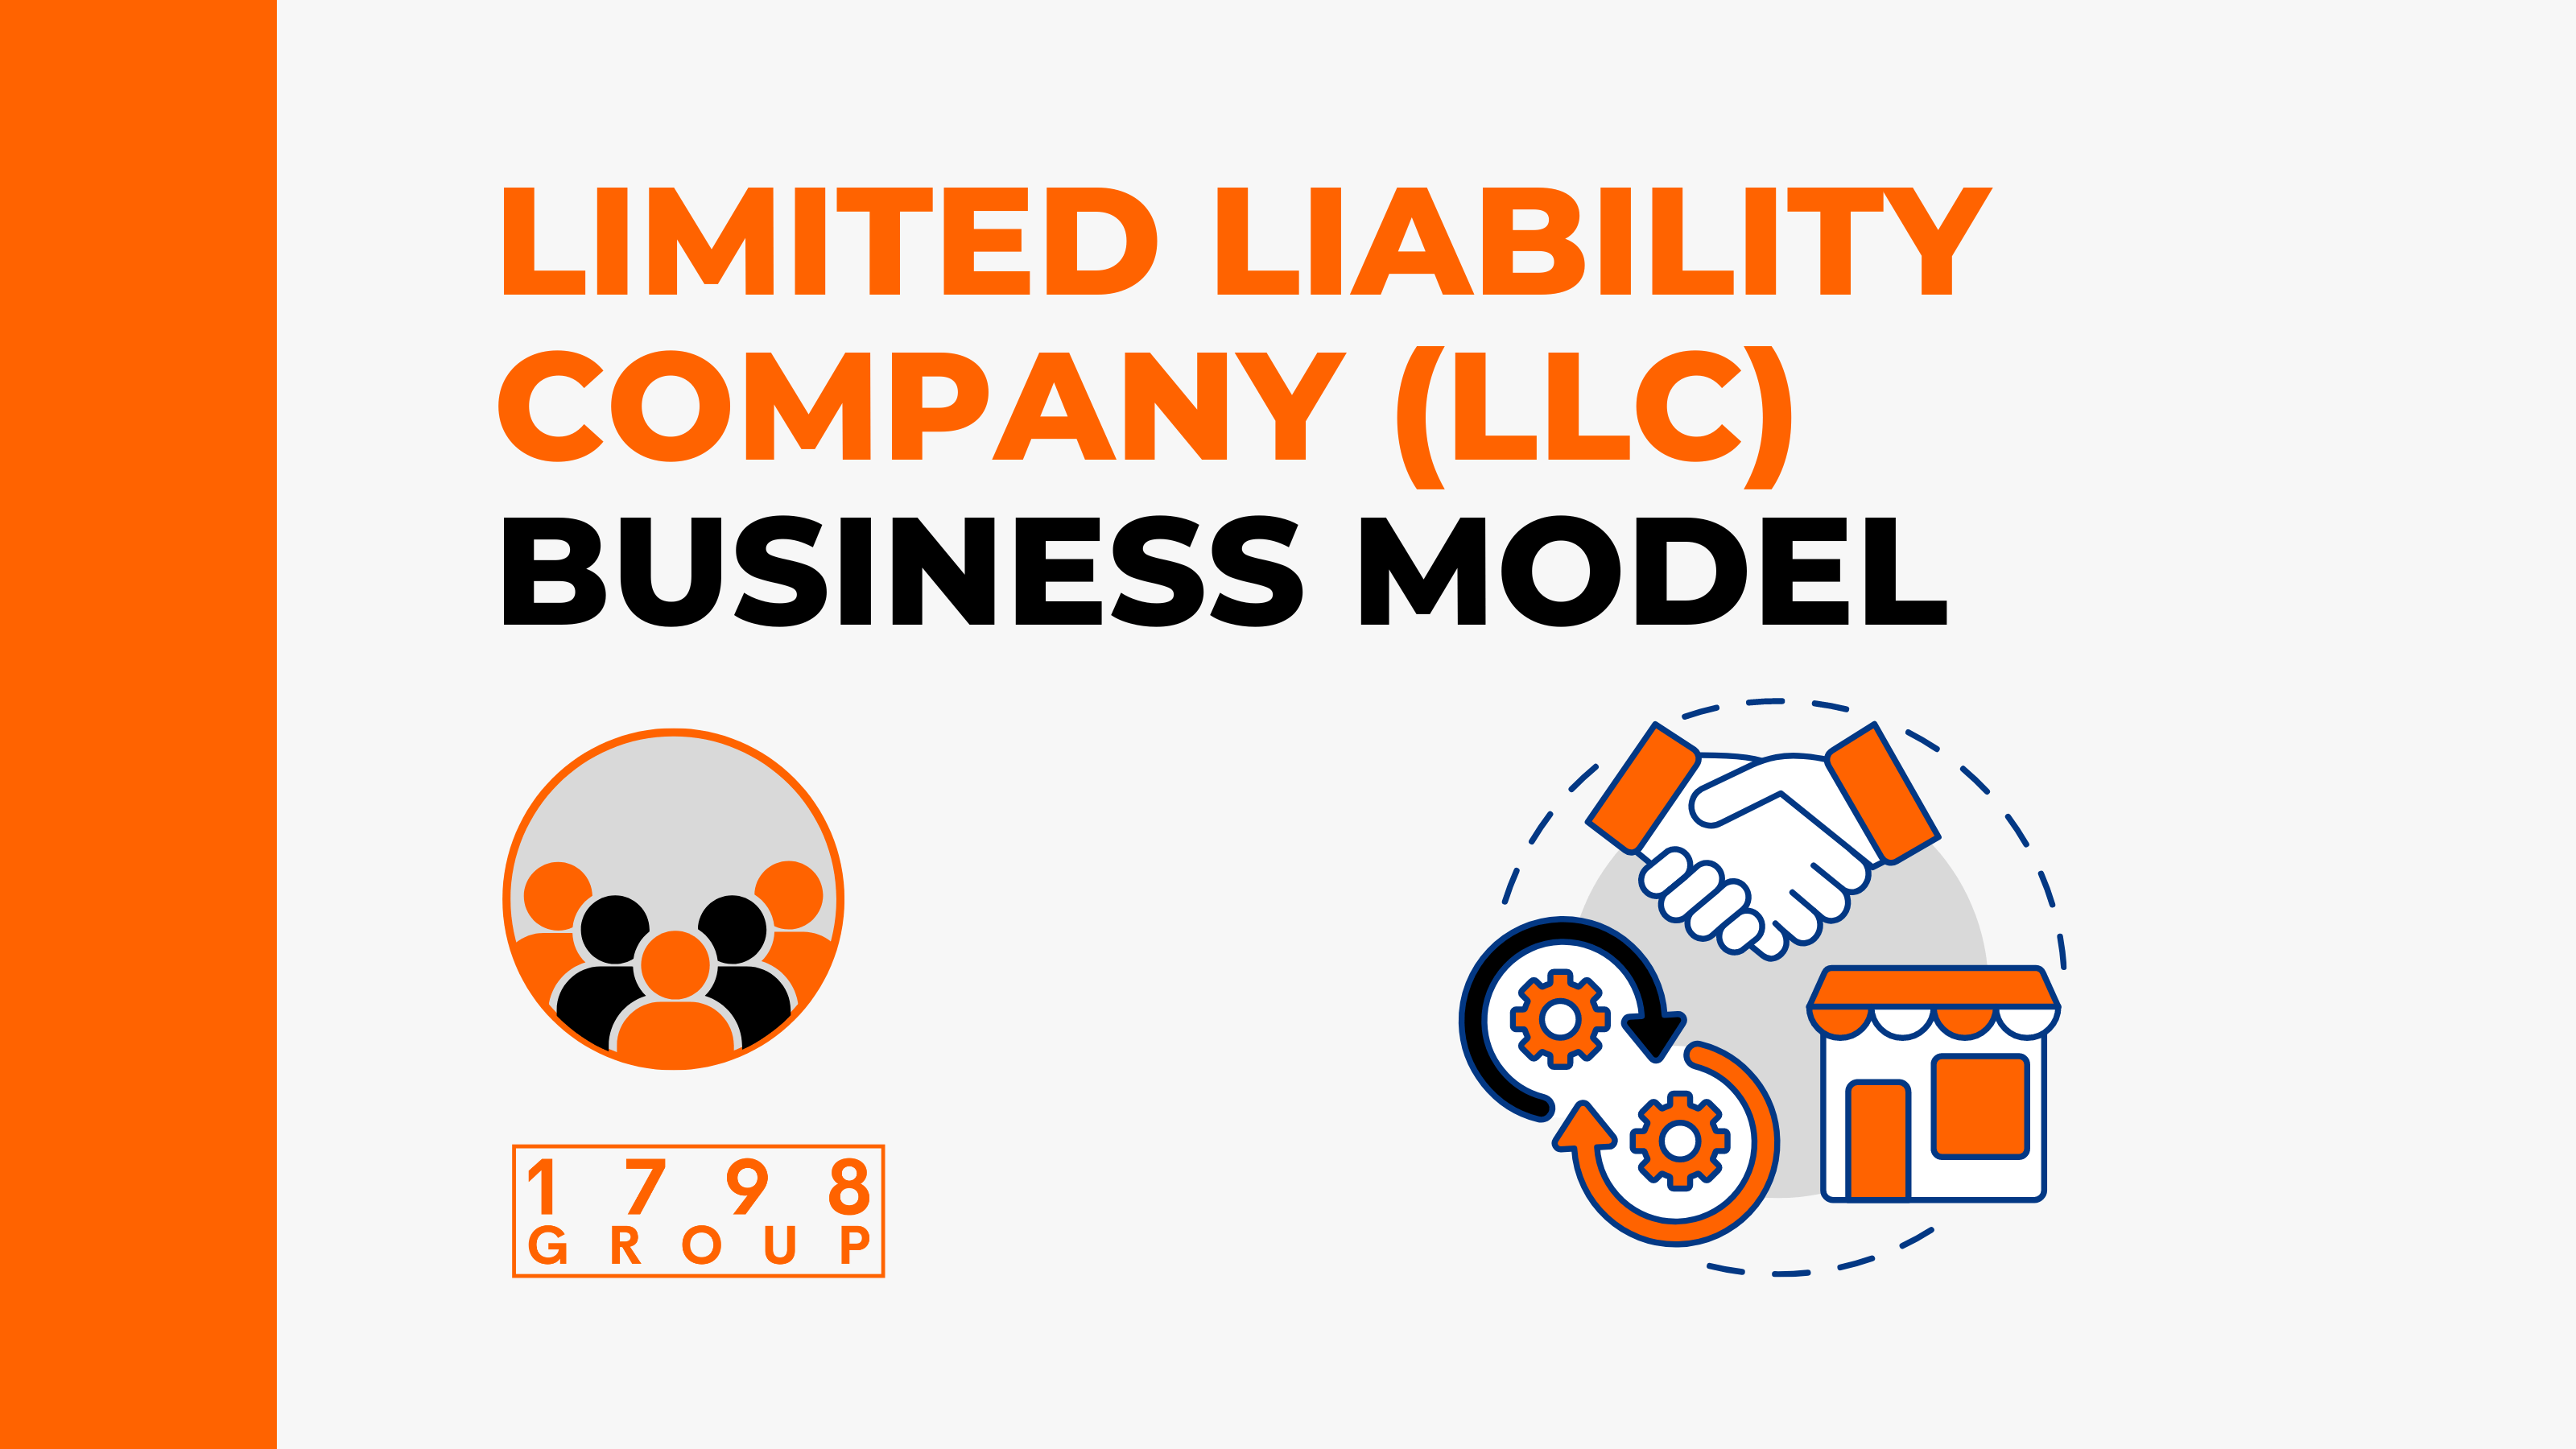 Limited Liability Company (LLC) business model